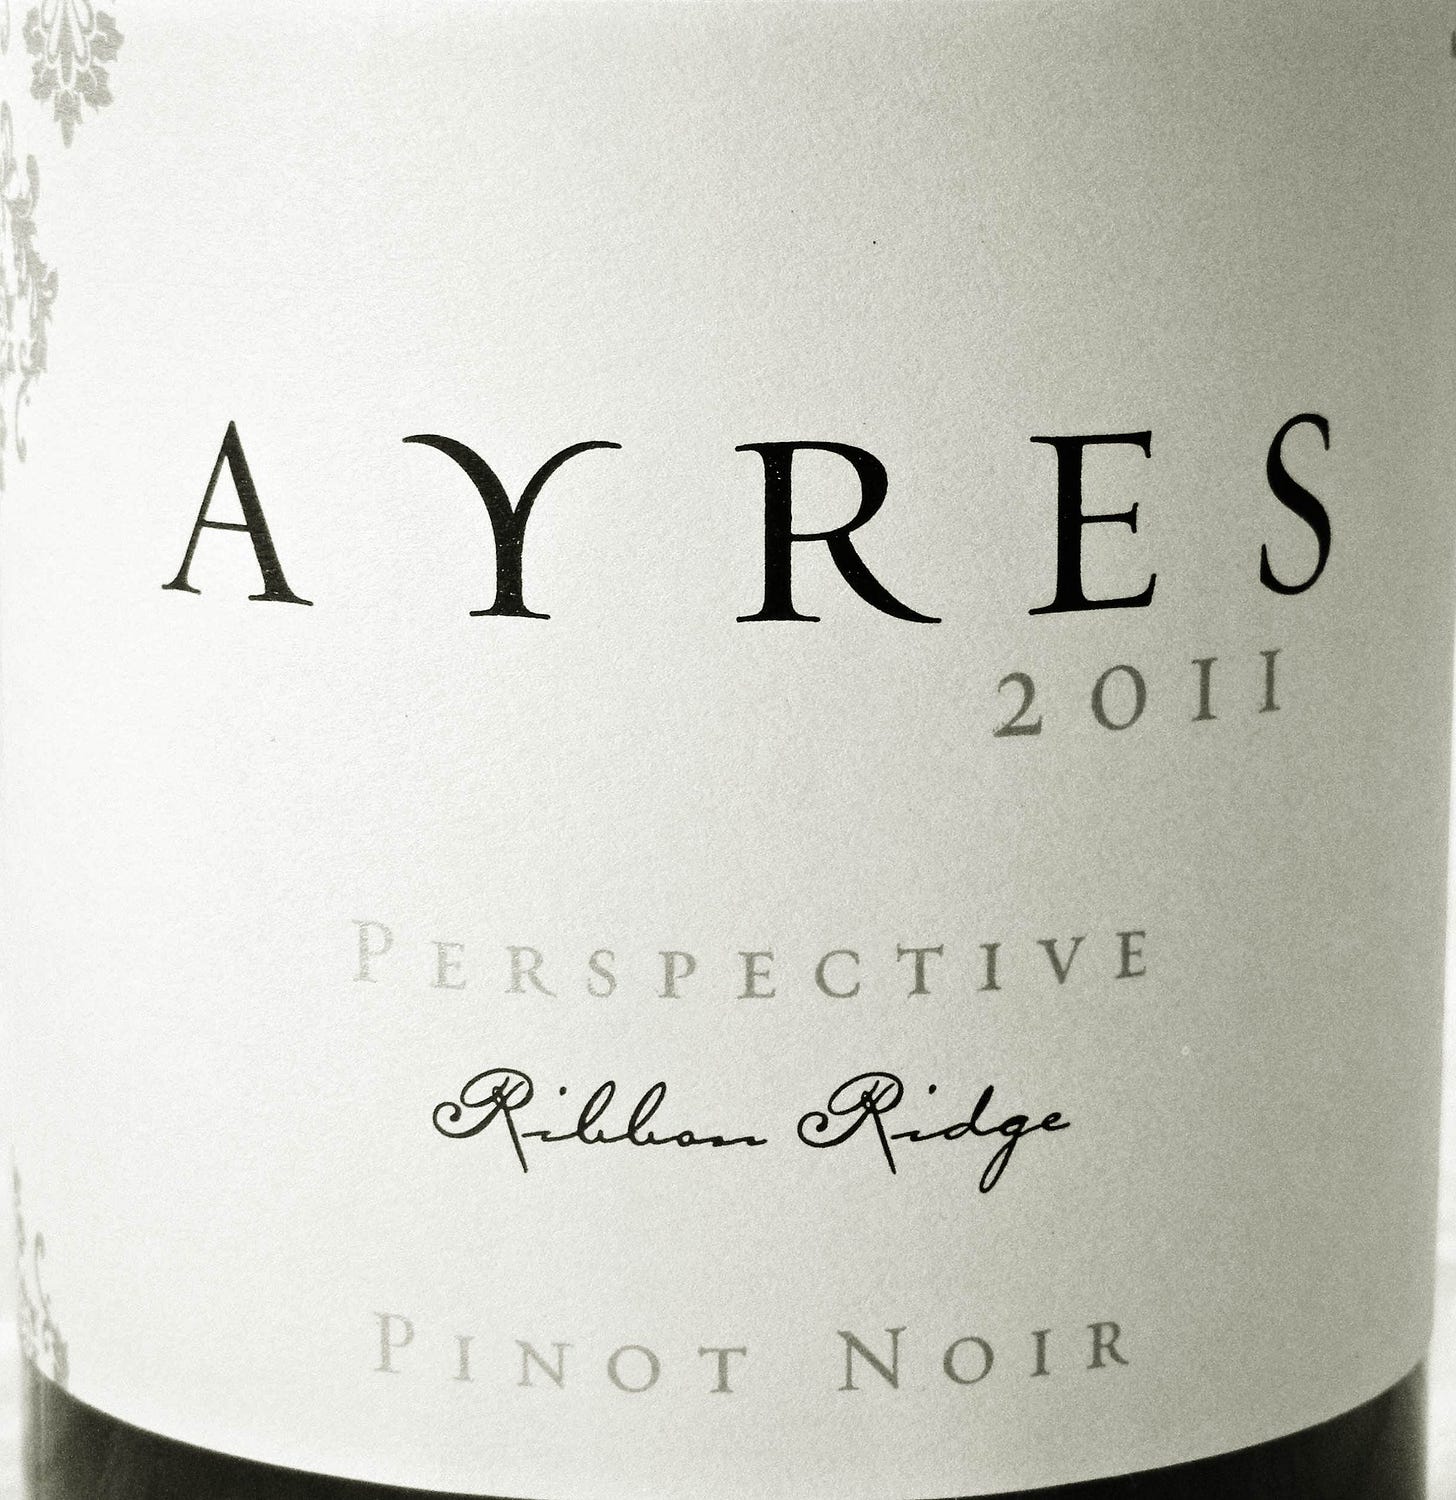 Pinot Noir Ayres Perspective 2011